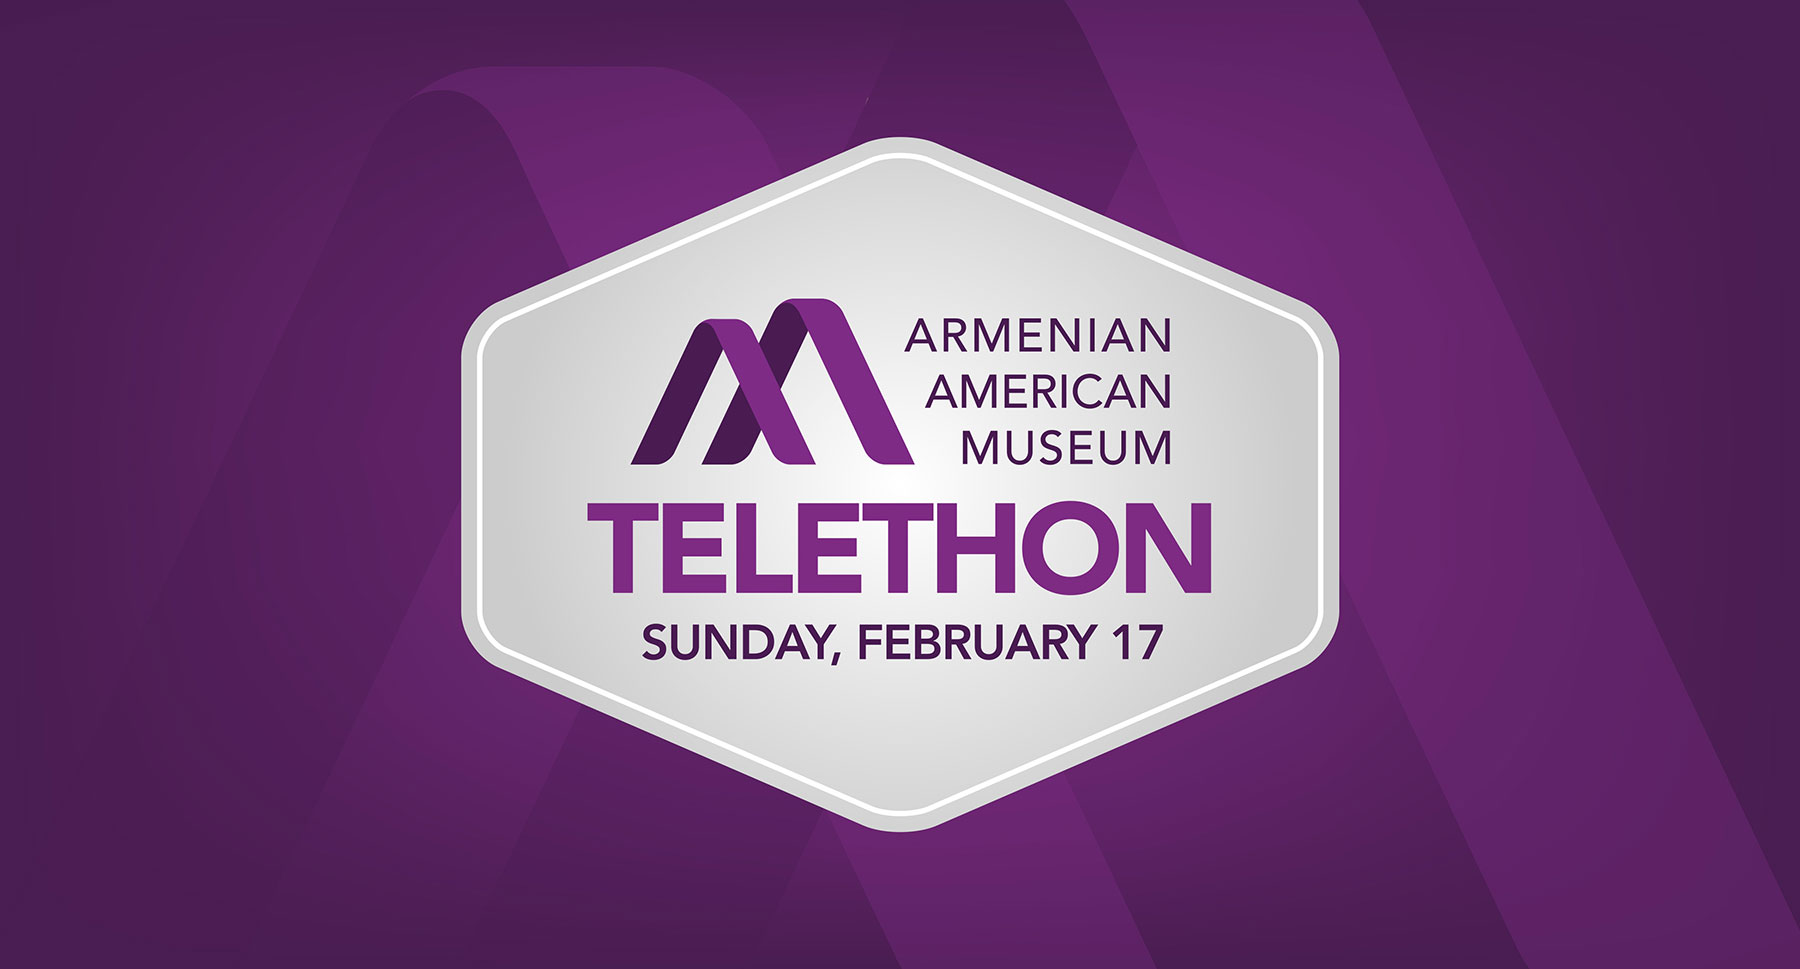 Armenian American Museum Announces Telethon on February 17